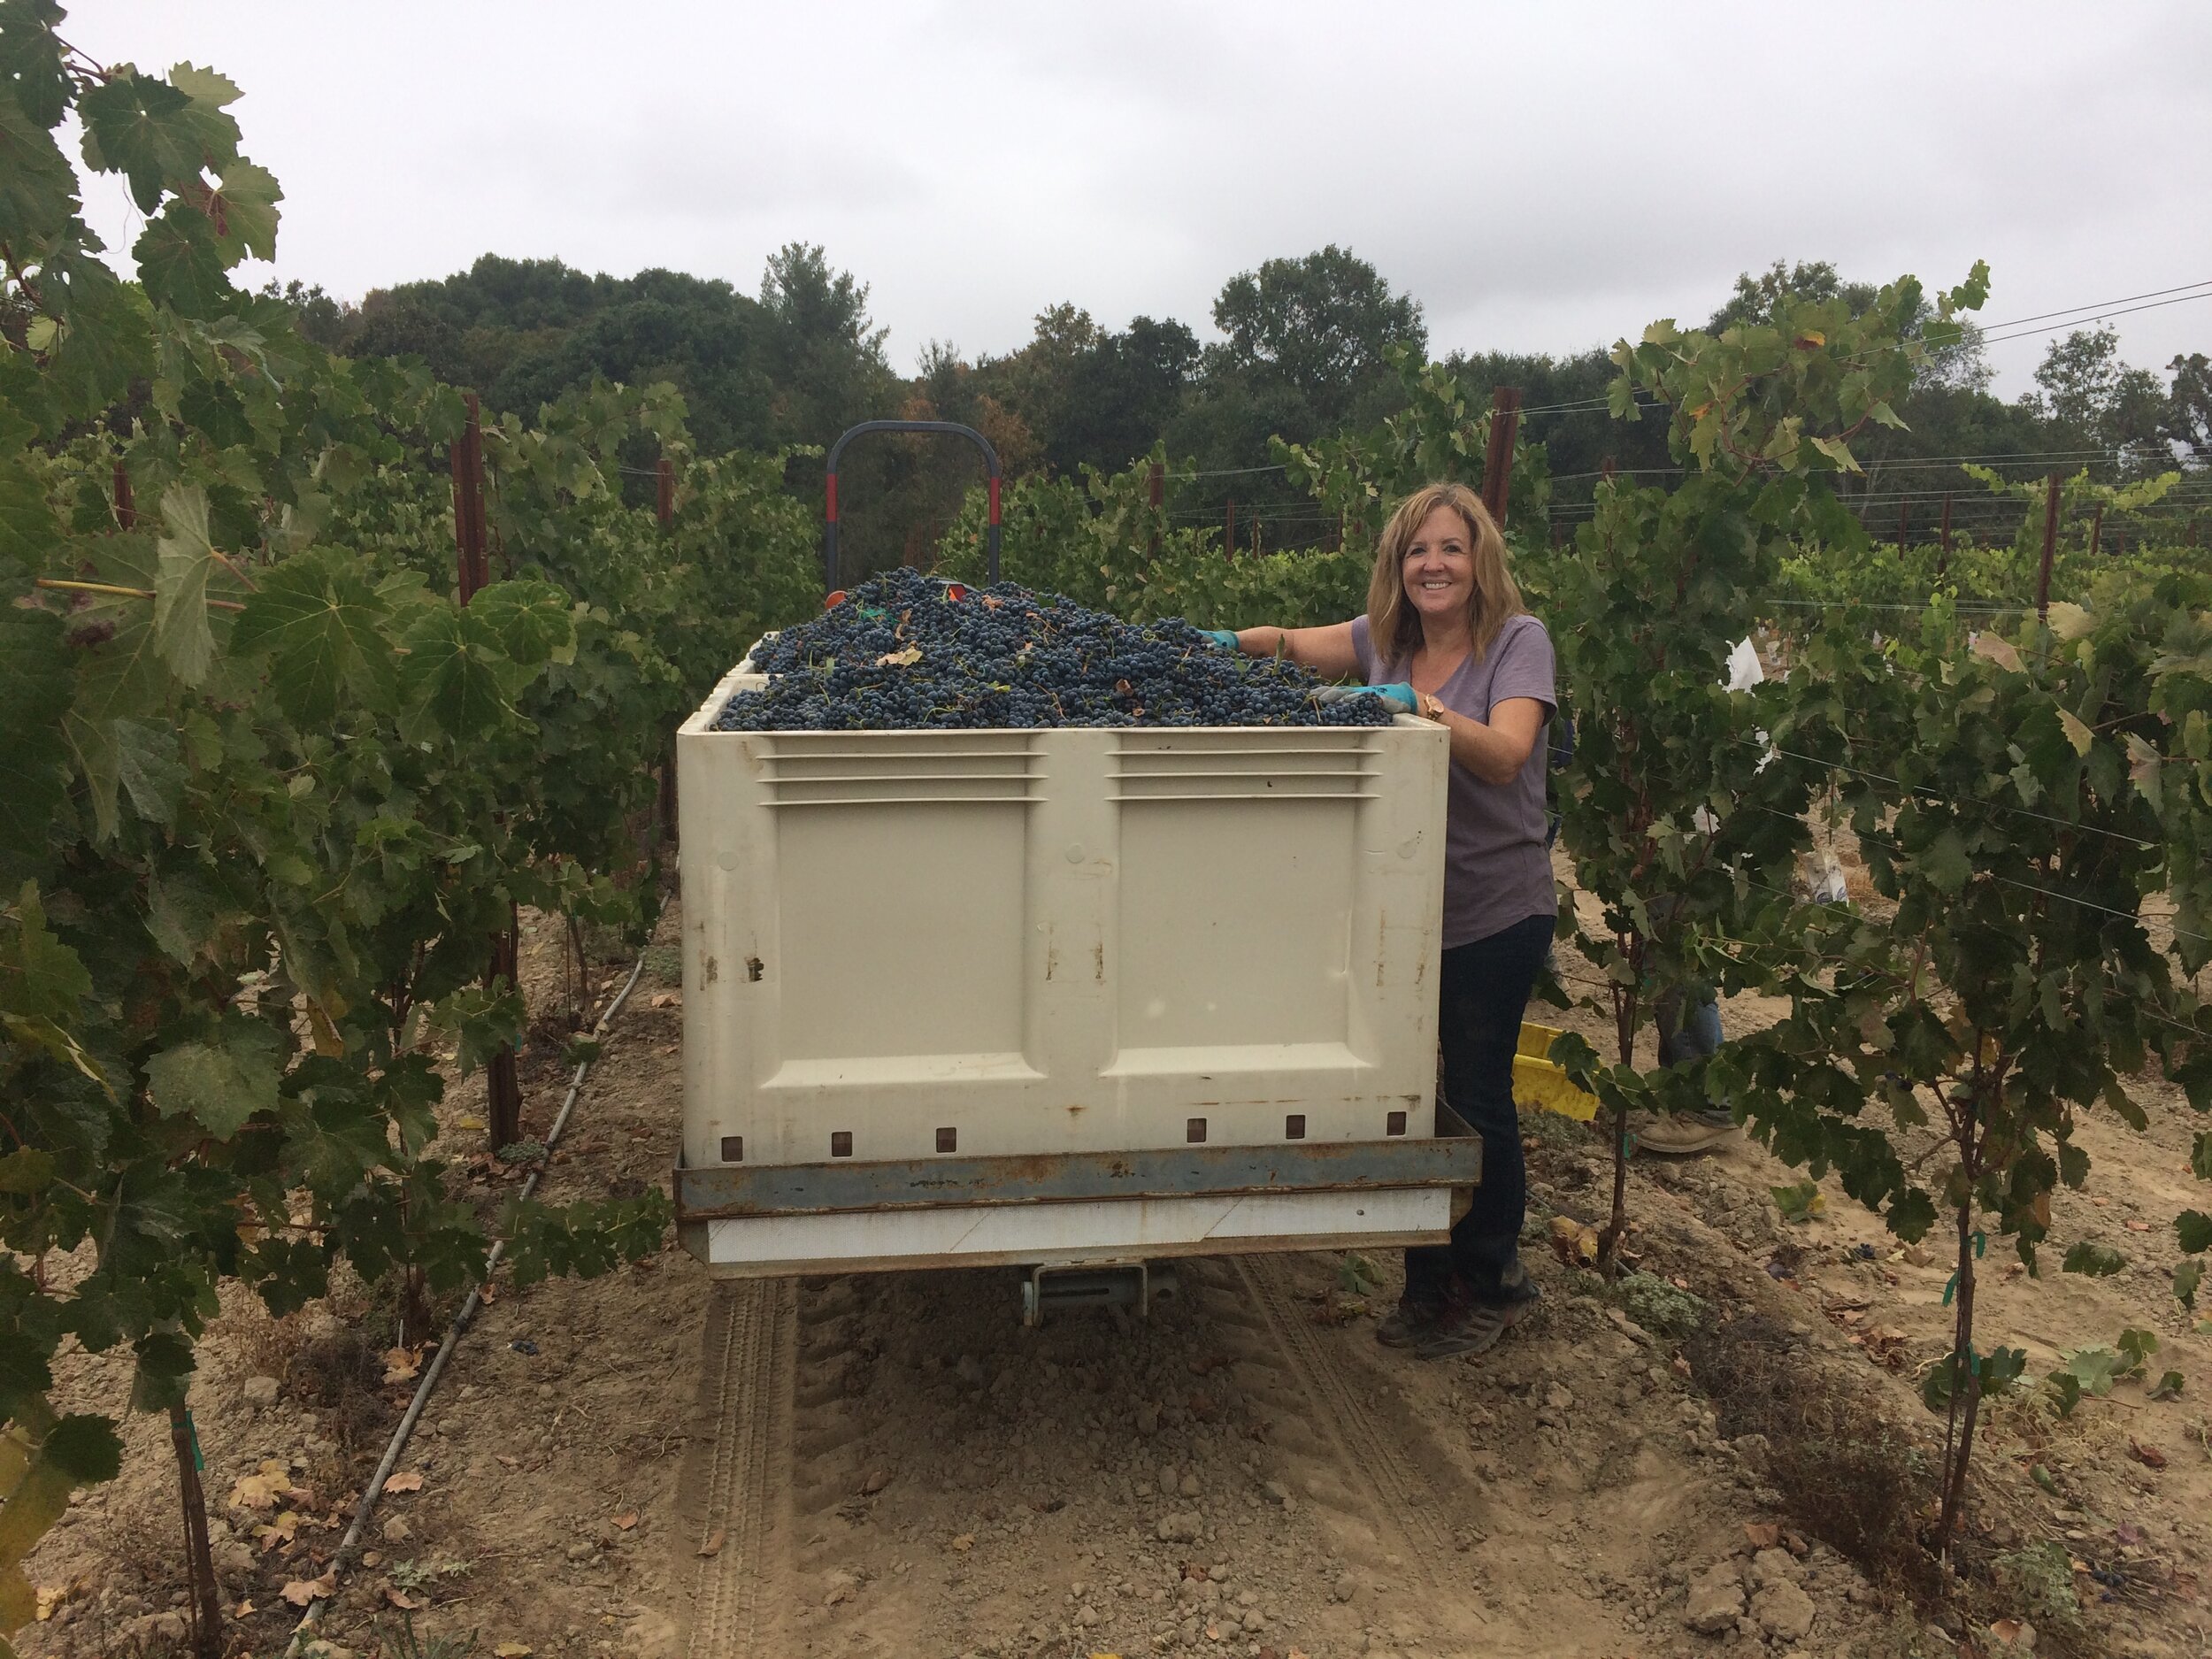 Trudi Graziano by picking bin in vineyard